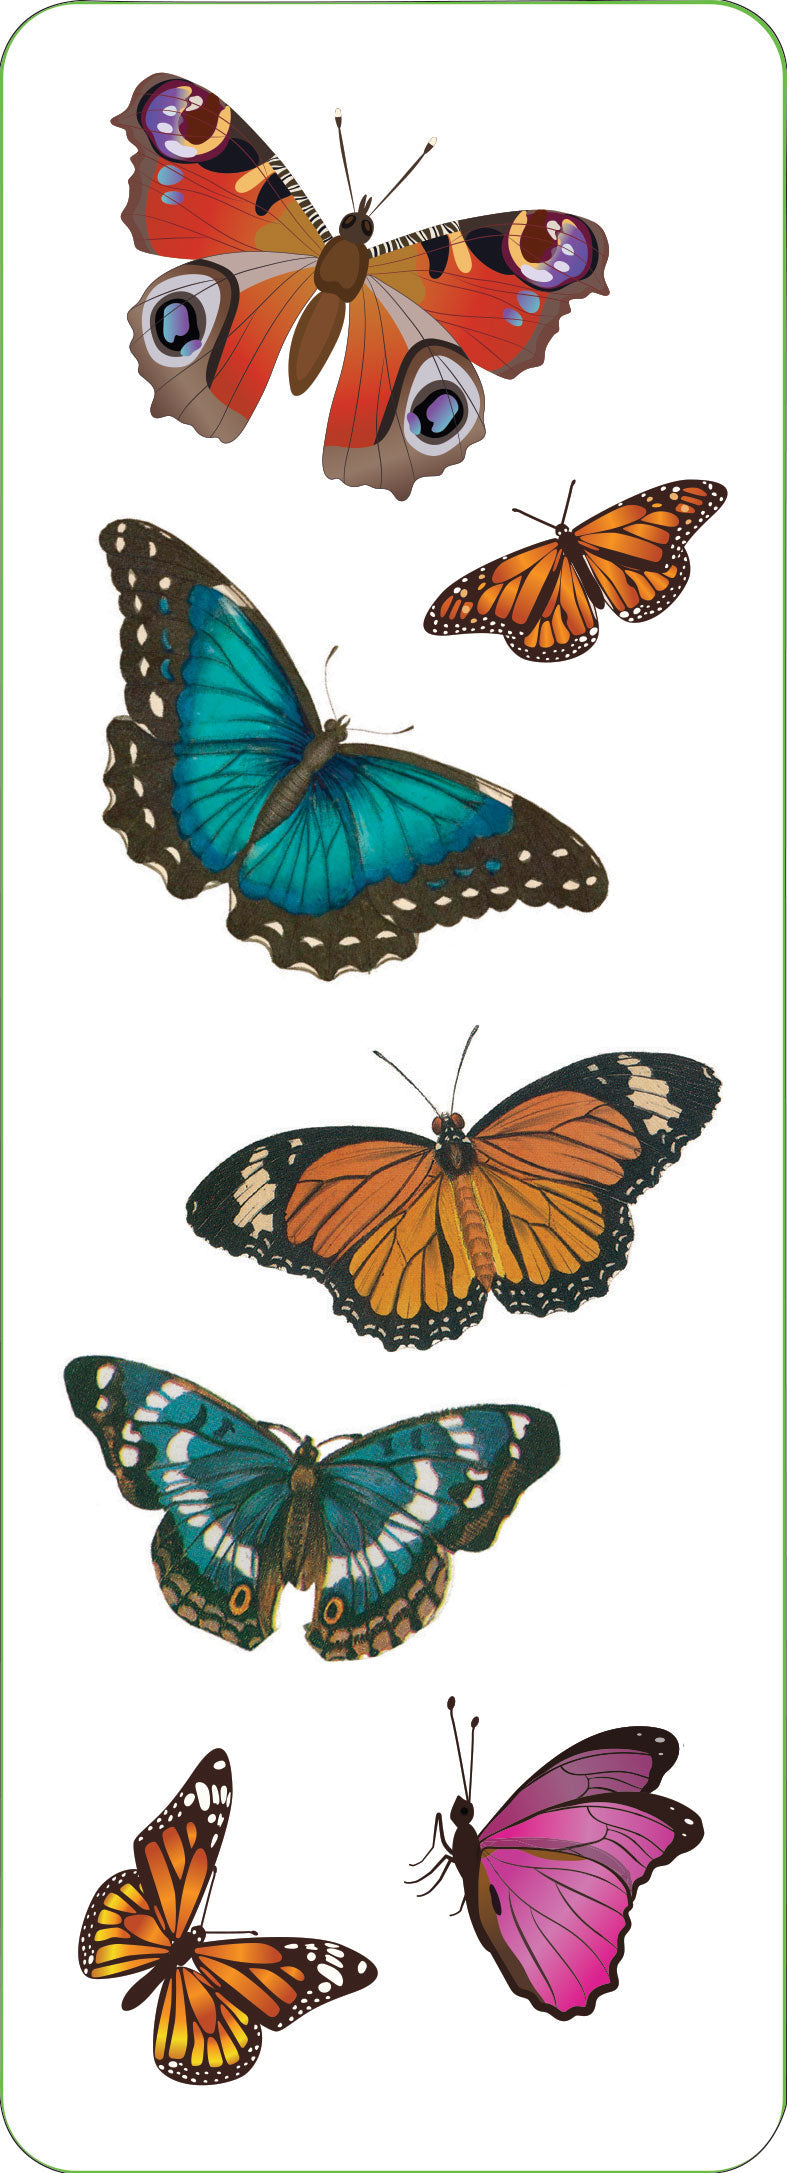 Butterfly Stickers - Neutral - STUDIO L2E